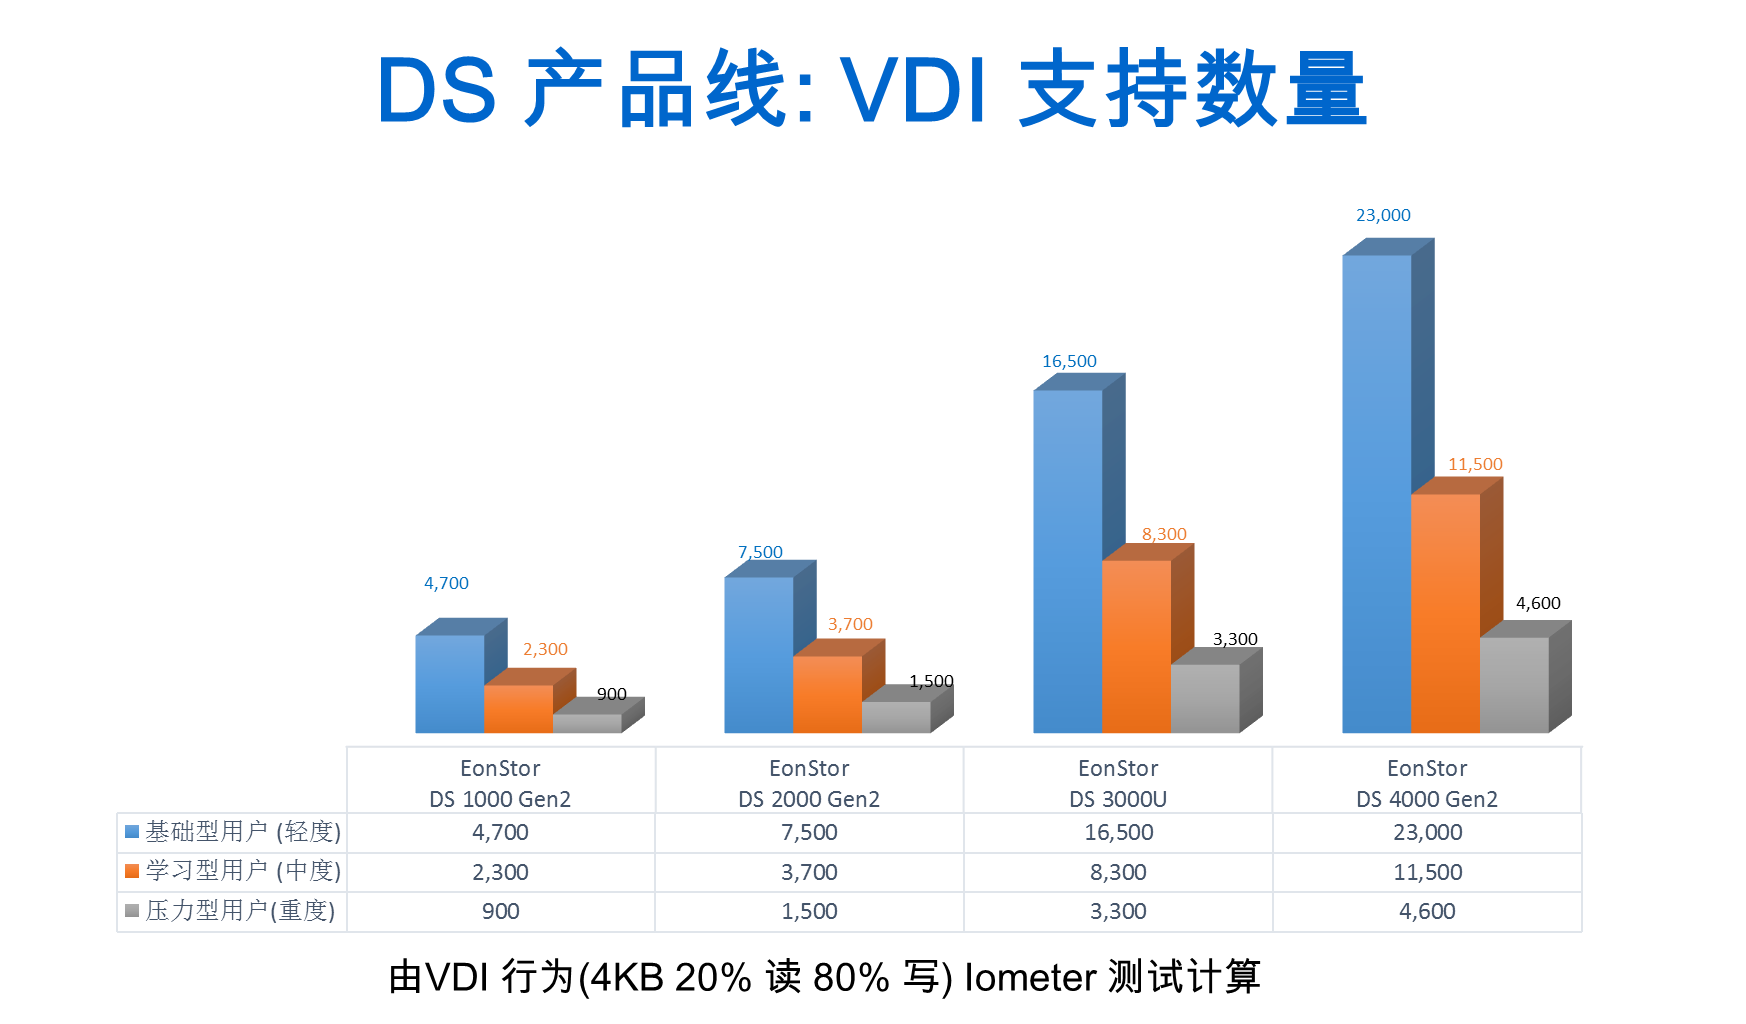 Infortrend VDI存儲方案成功打入世界級光通信企業